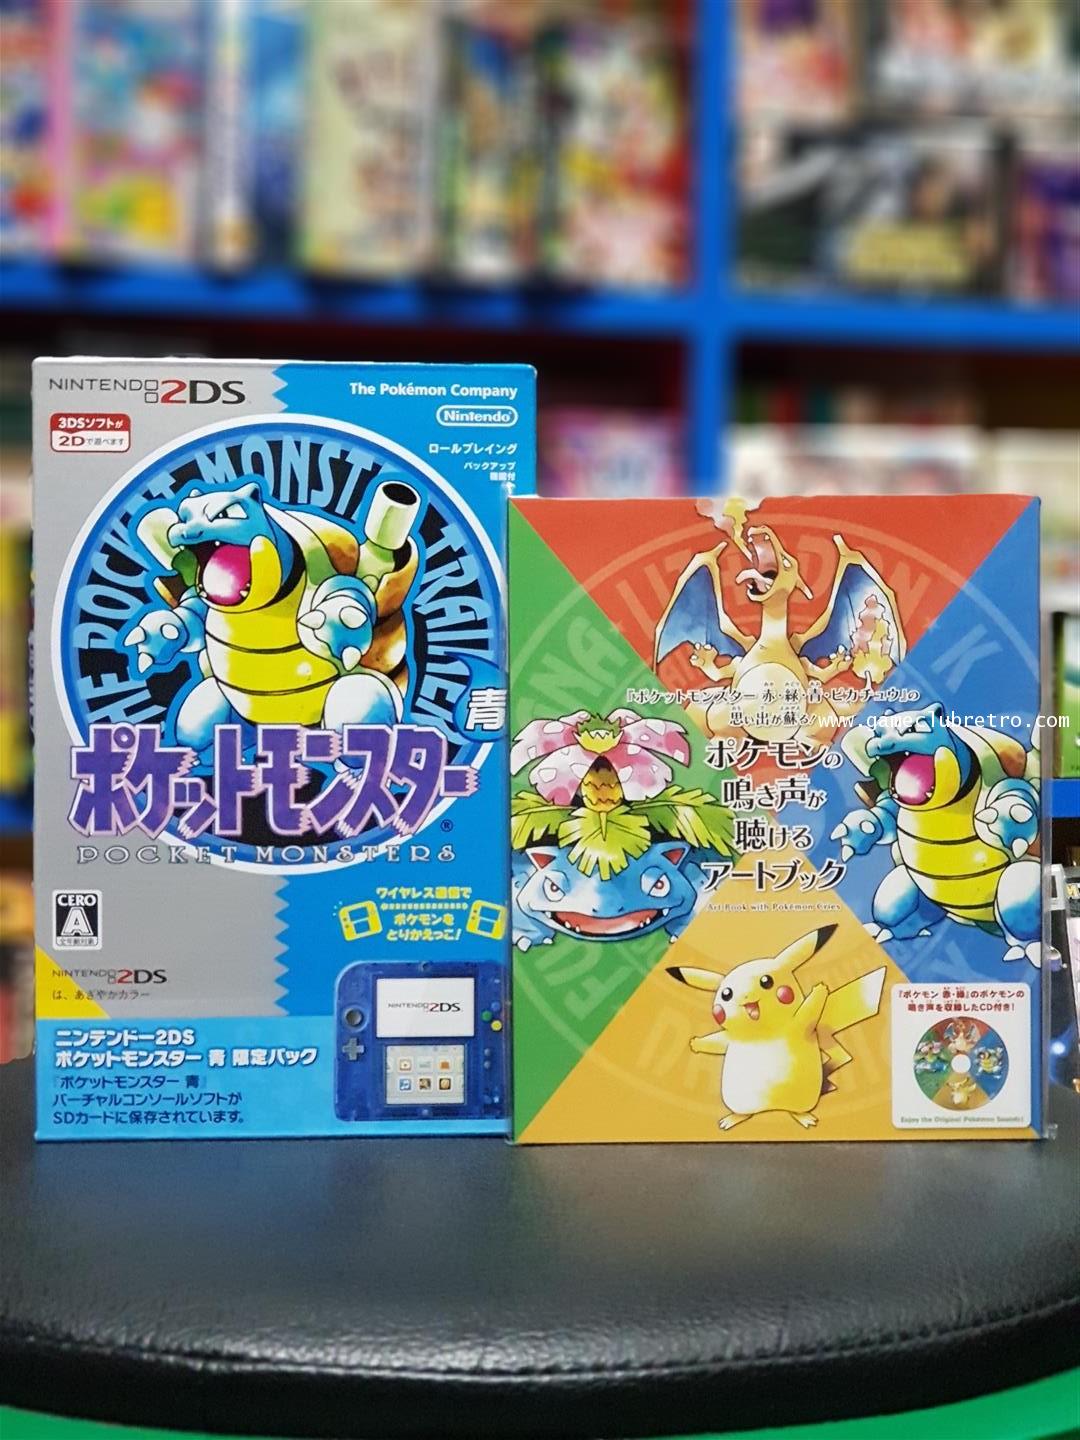 Nintendo 2DS Pokemon Blue Pokemon Center Limited